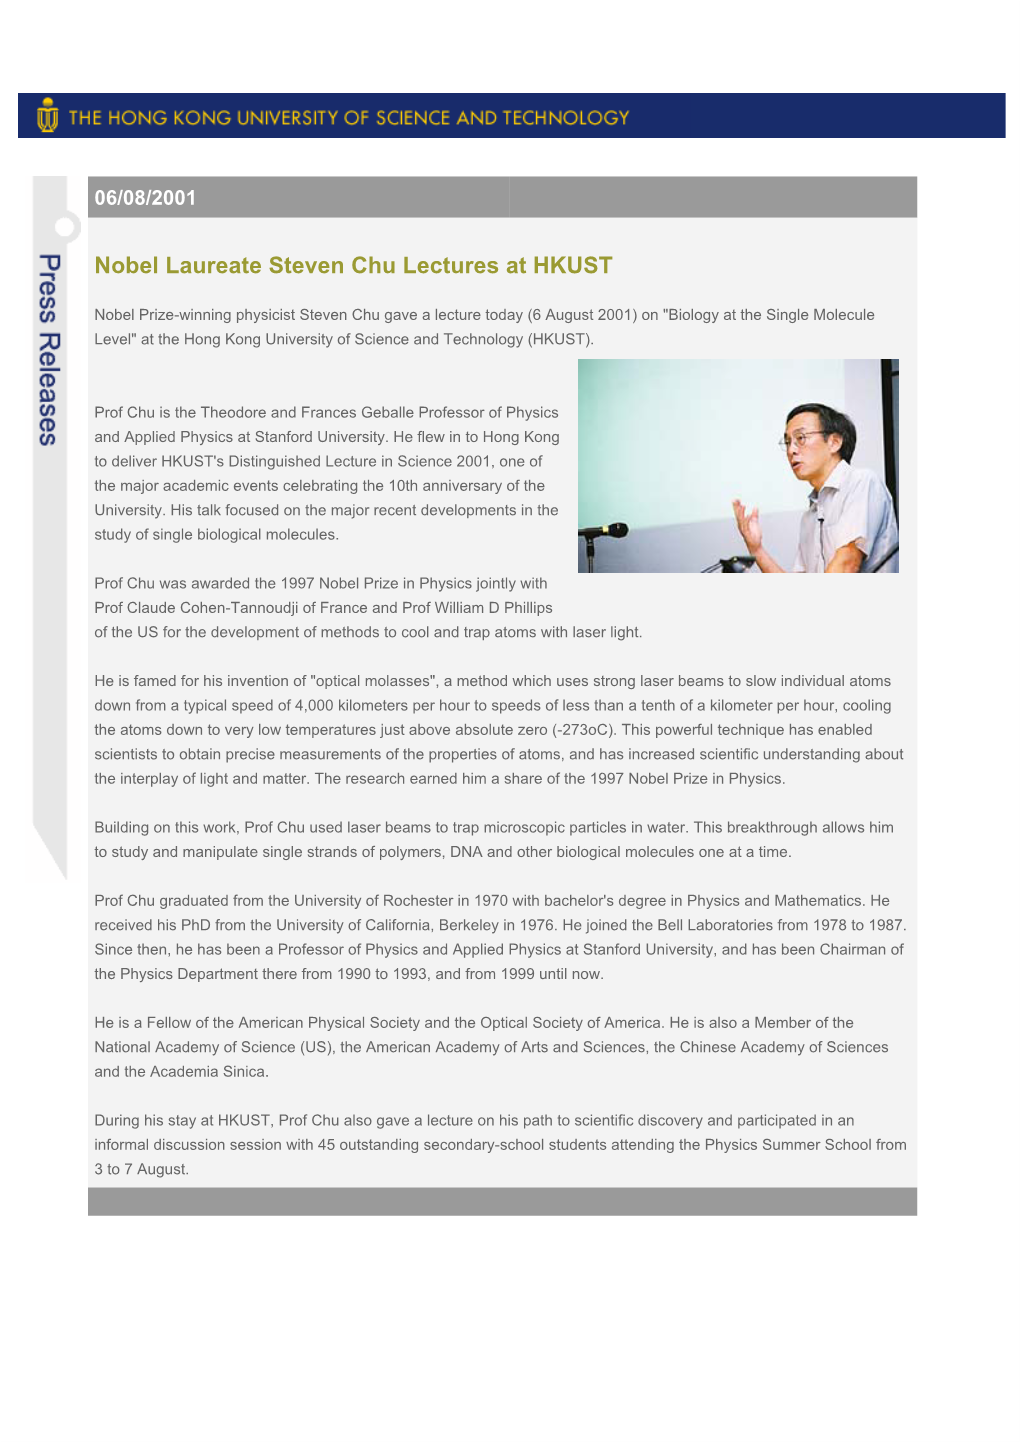 Nobel Laureate Steven Chu Lectures at HKUST